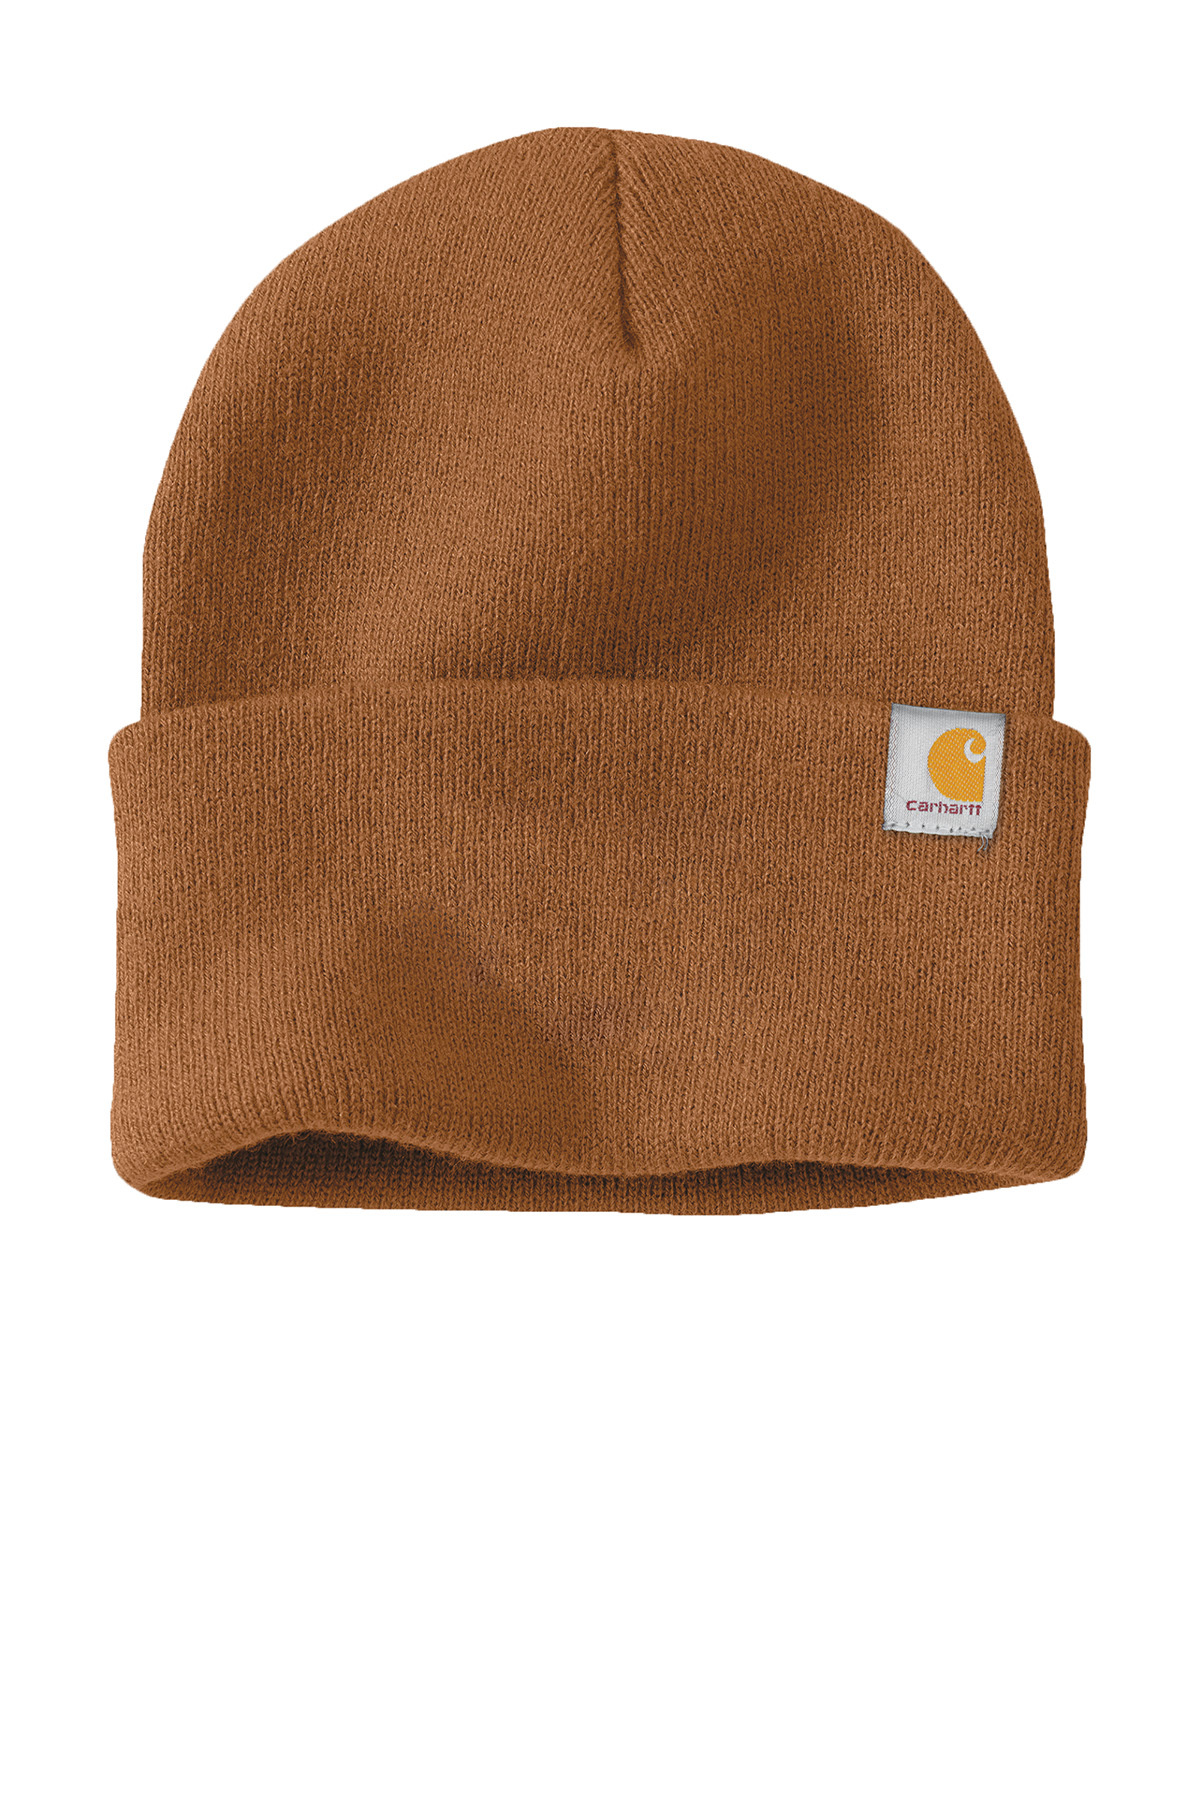 Marketing Long Knit Watchcap Beanies (Unisex), Hats, Caps & Visors